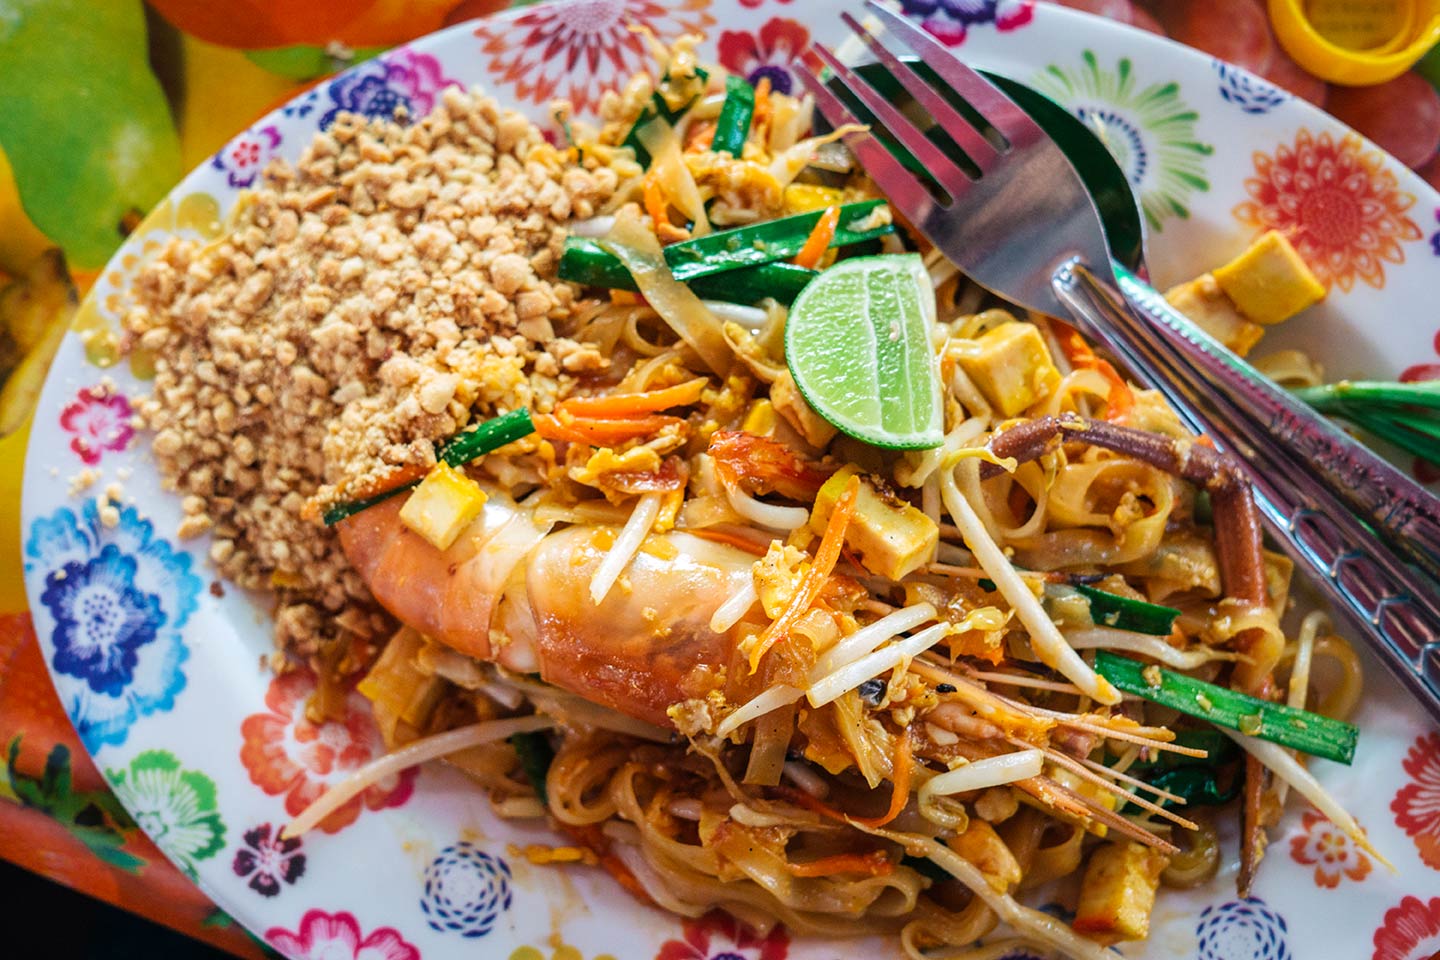  Pad Thai noodles at Chatuchak Market Bangkok Thajsko